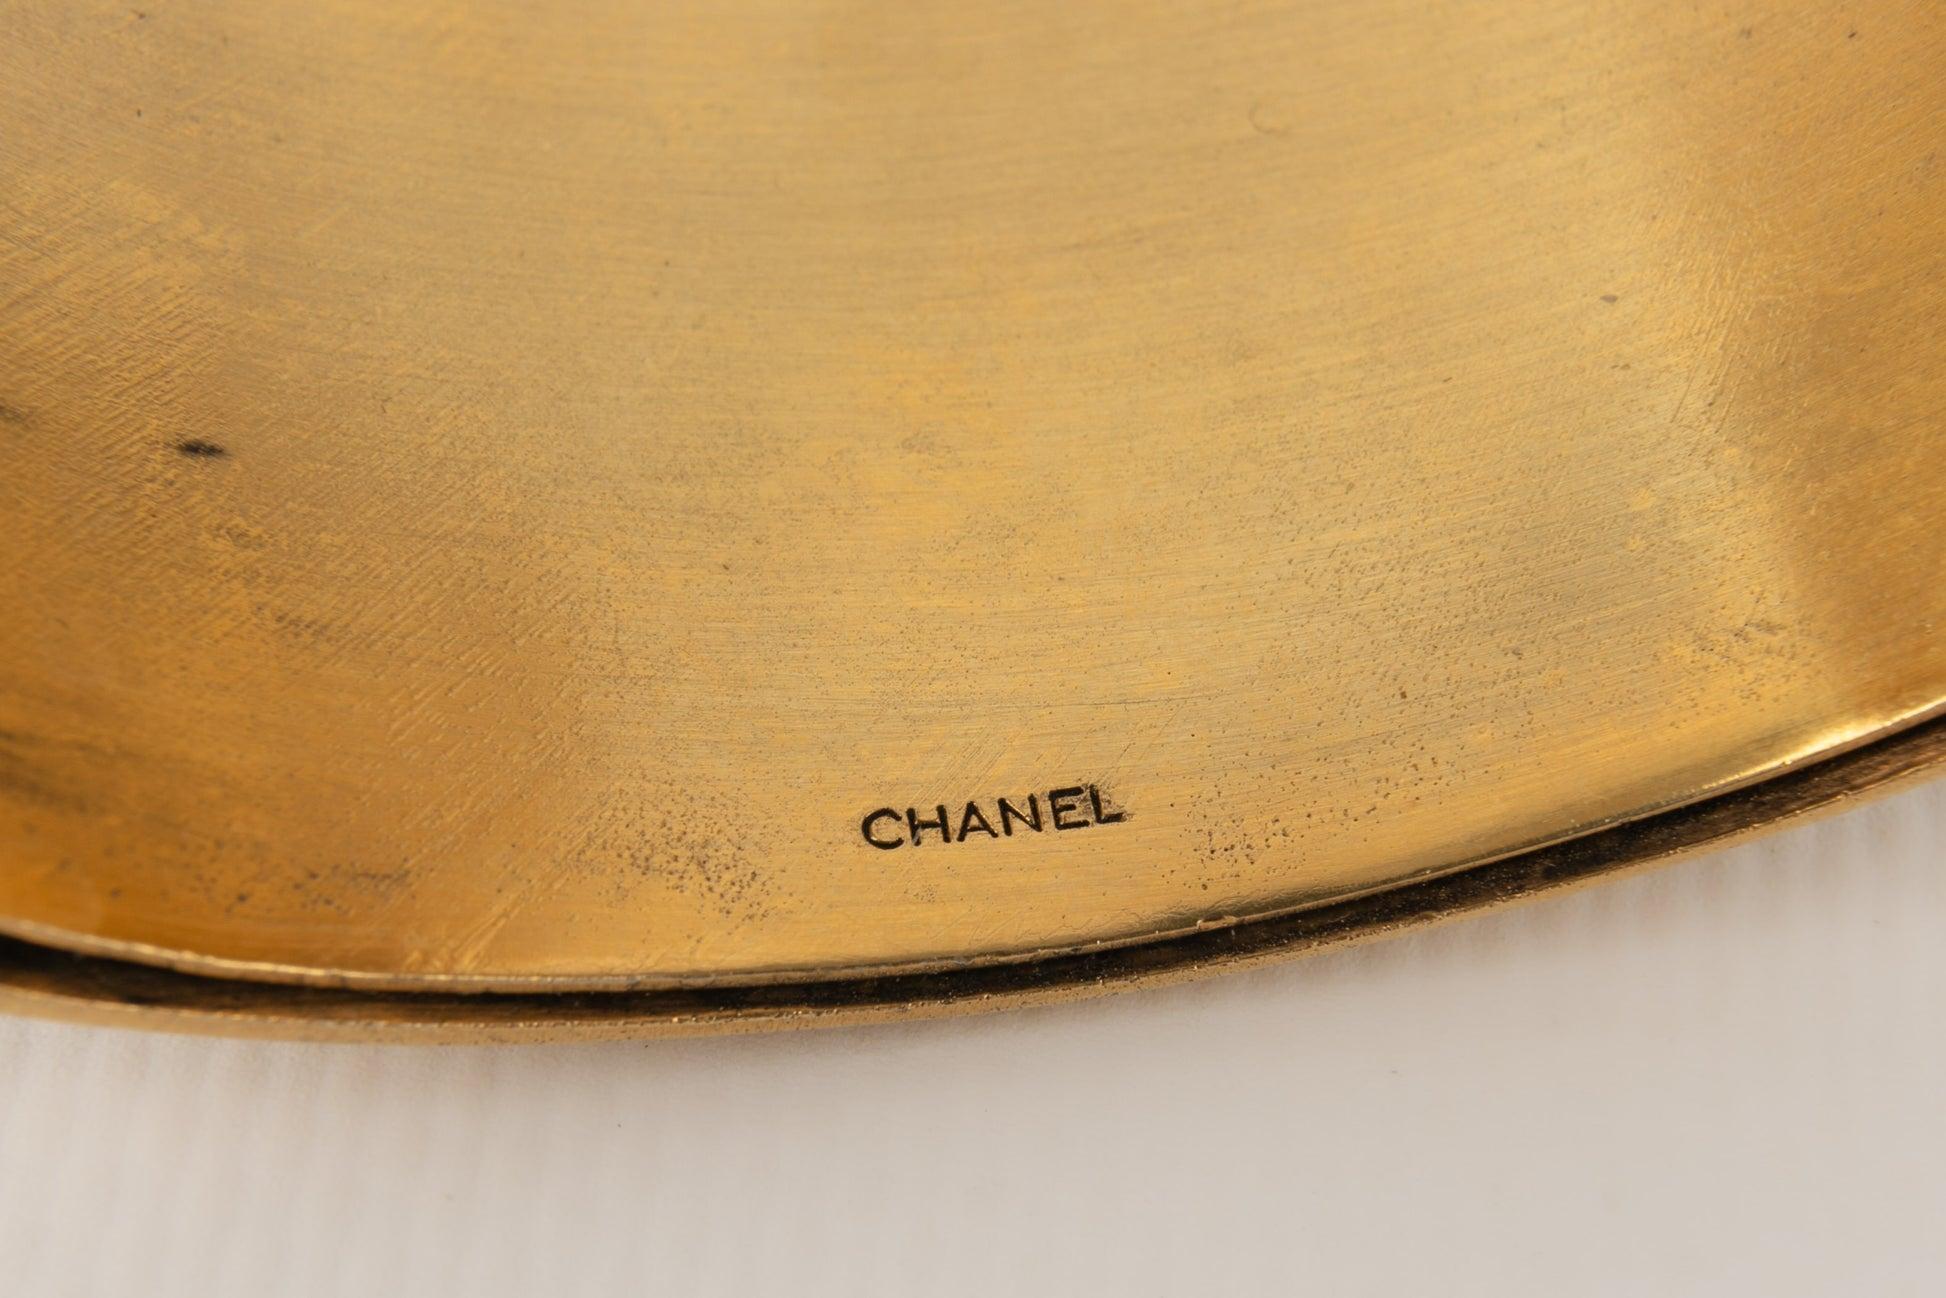 Chanel Cuff Bracelet in Golden Metal on a Black Background For Sale 5